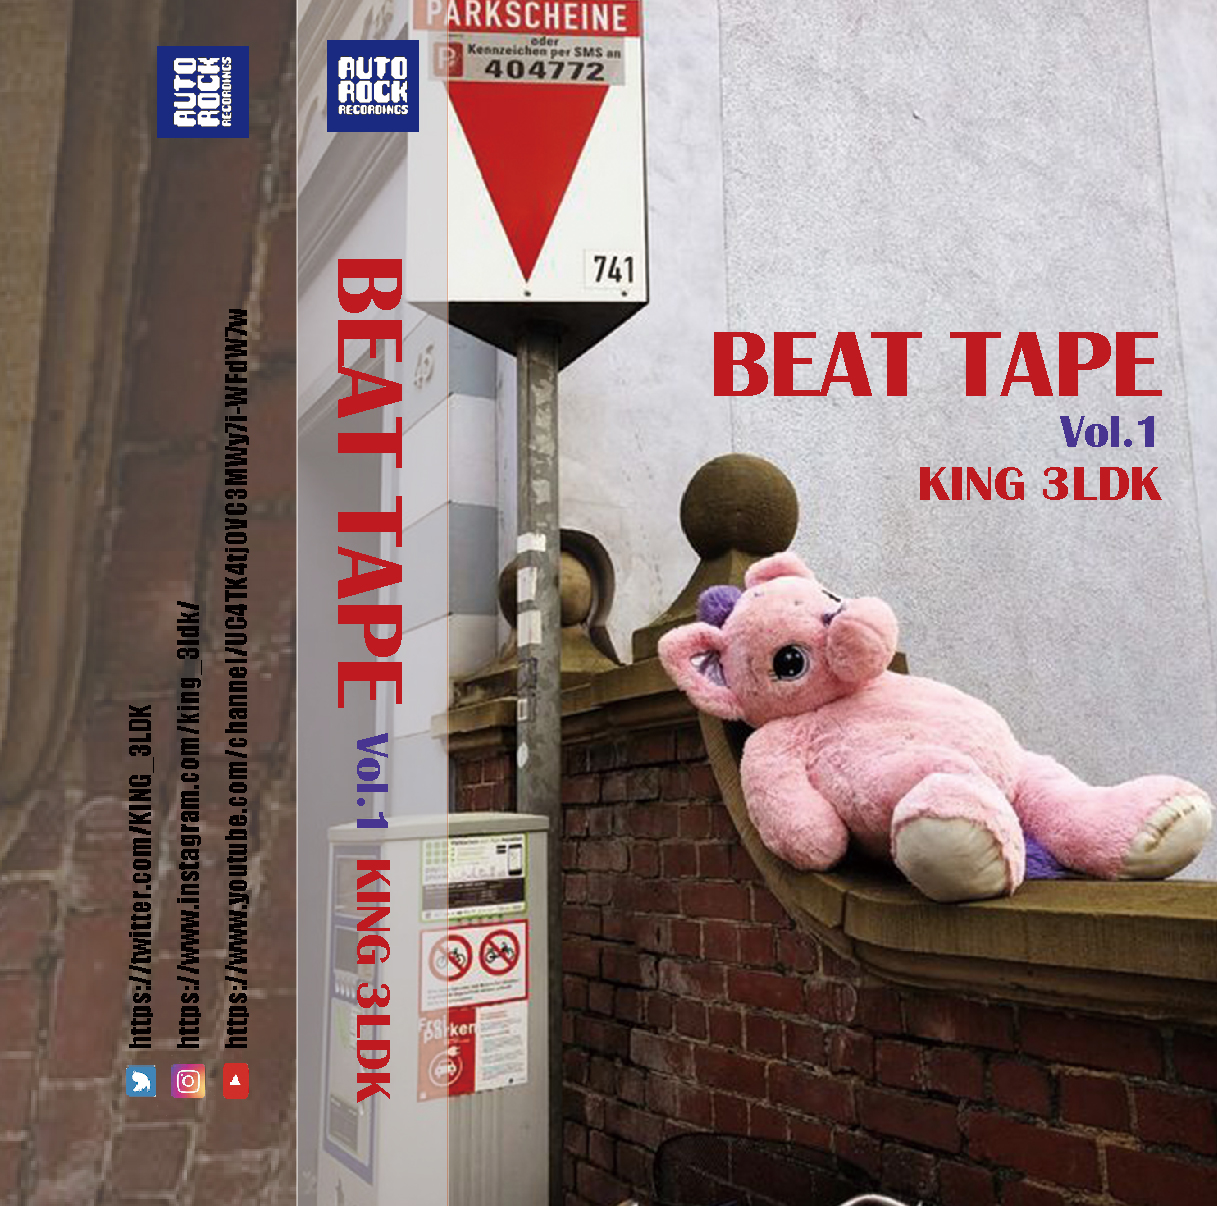 KING 3LDK 'beat tape Vol.1'